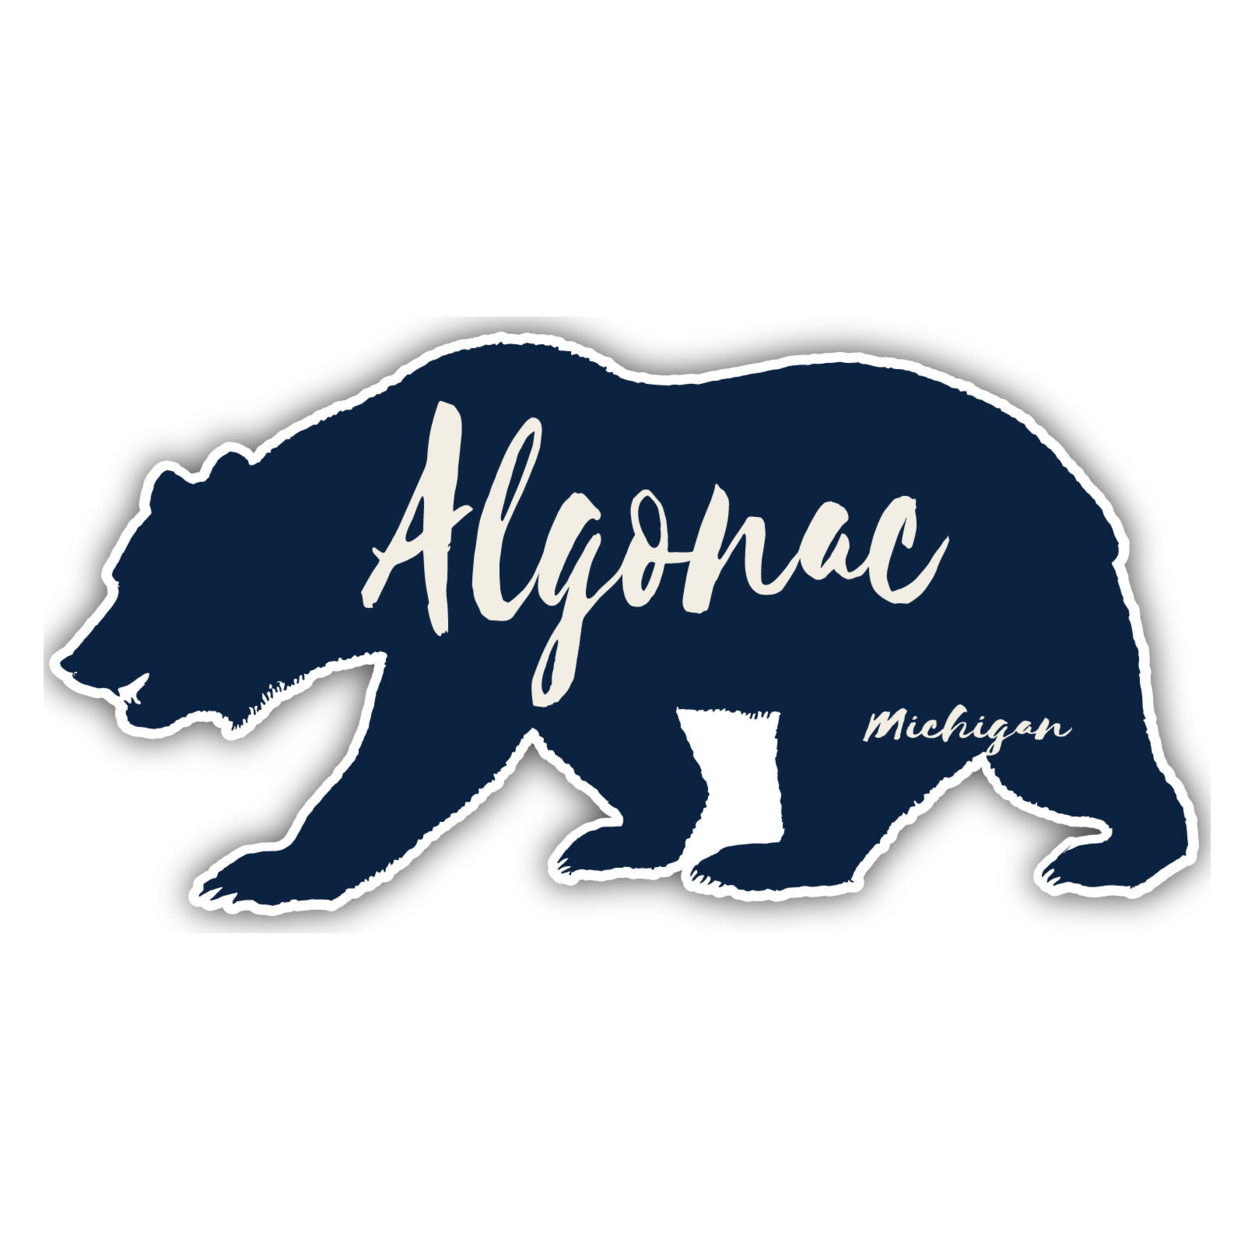 Algonac Michigan Souvenir Decorative Stickers (Choose Theme And Size) - 4-Pack, 12-Inch, Bear